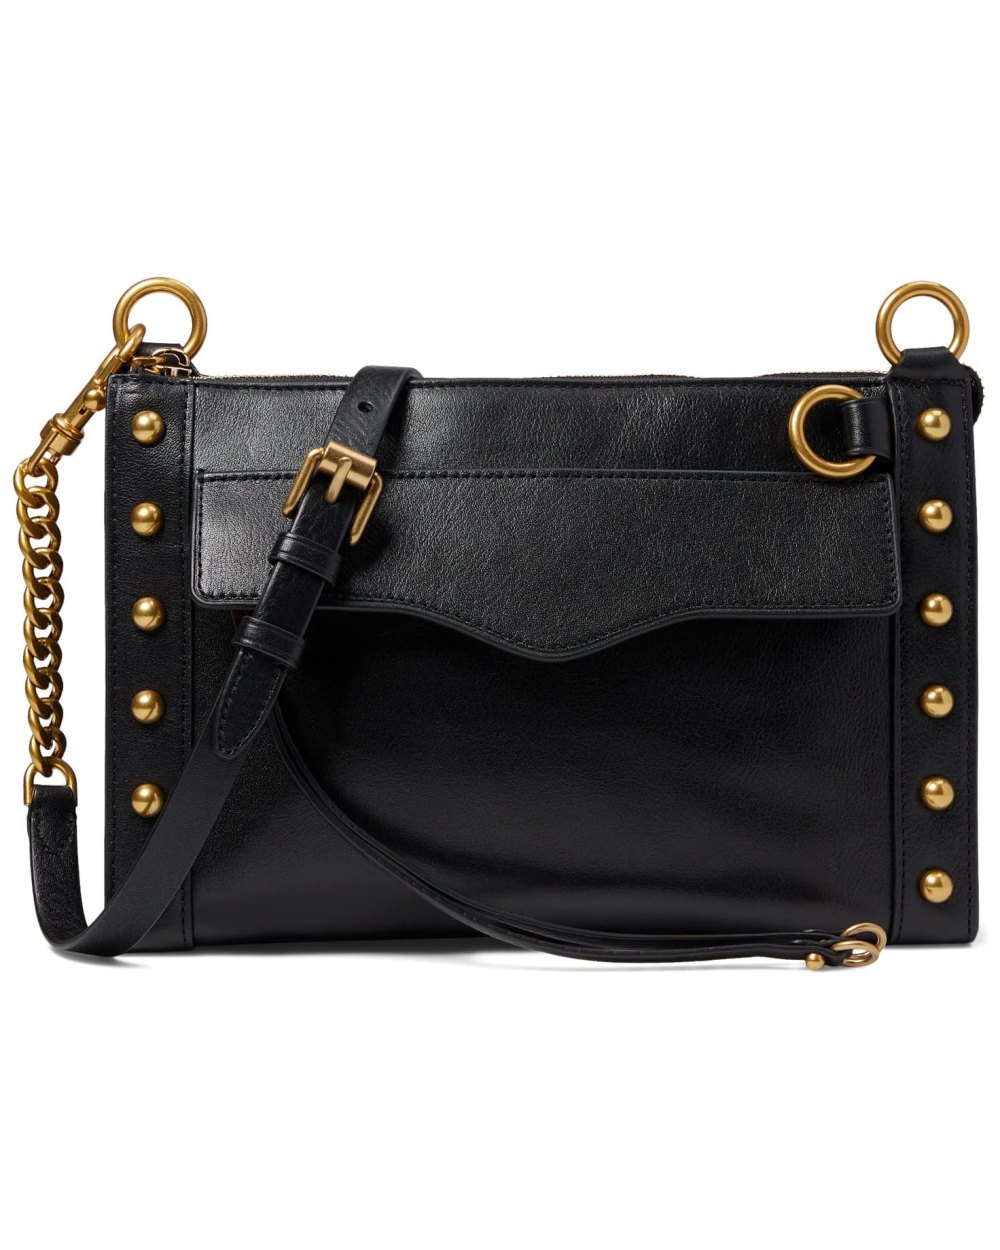 Rebecca Minkoff M.A.B. Leather Bag